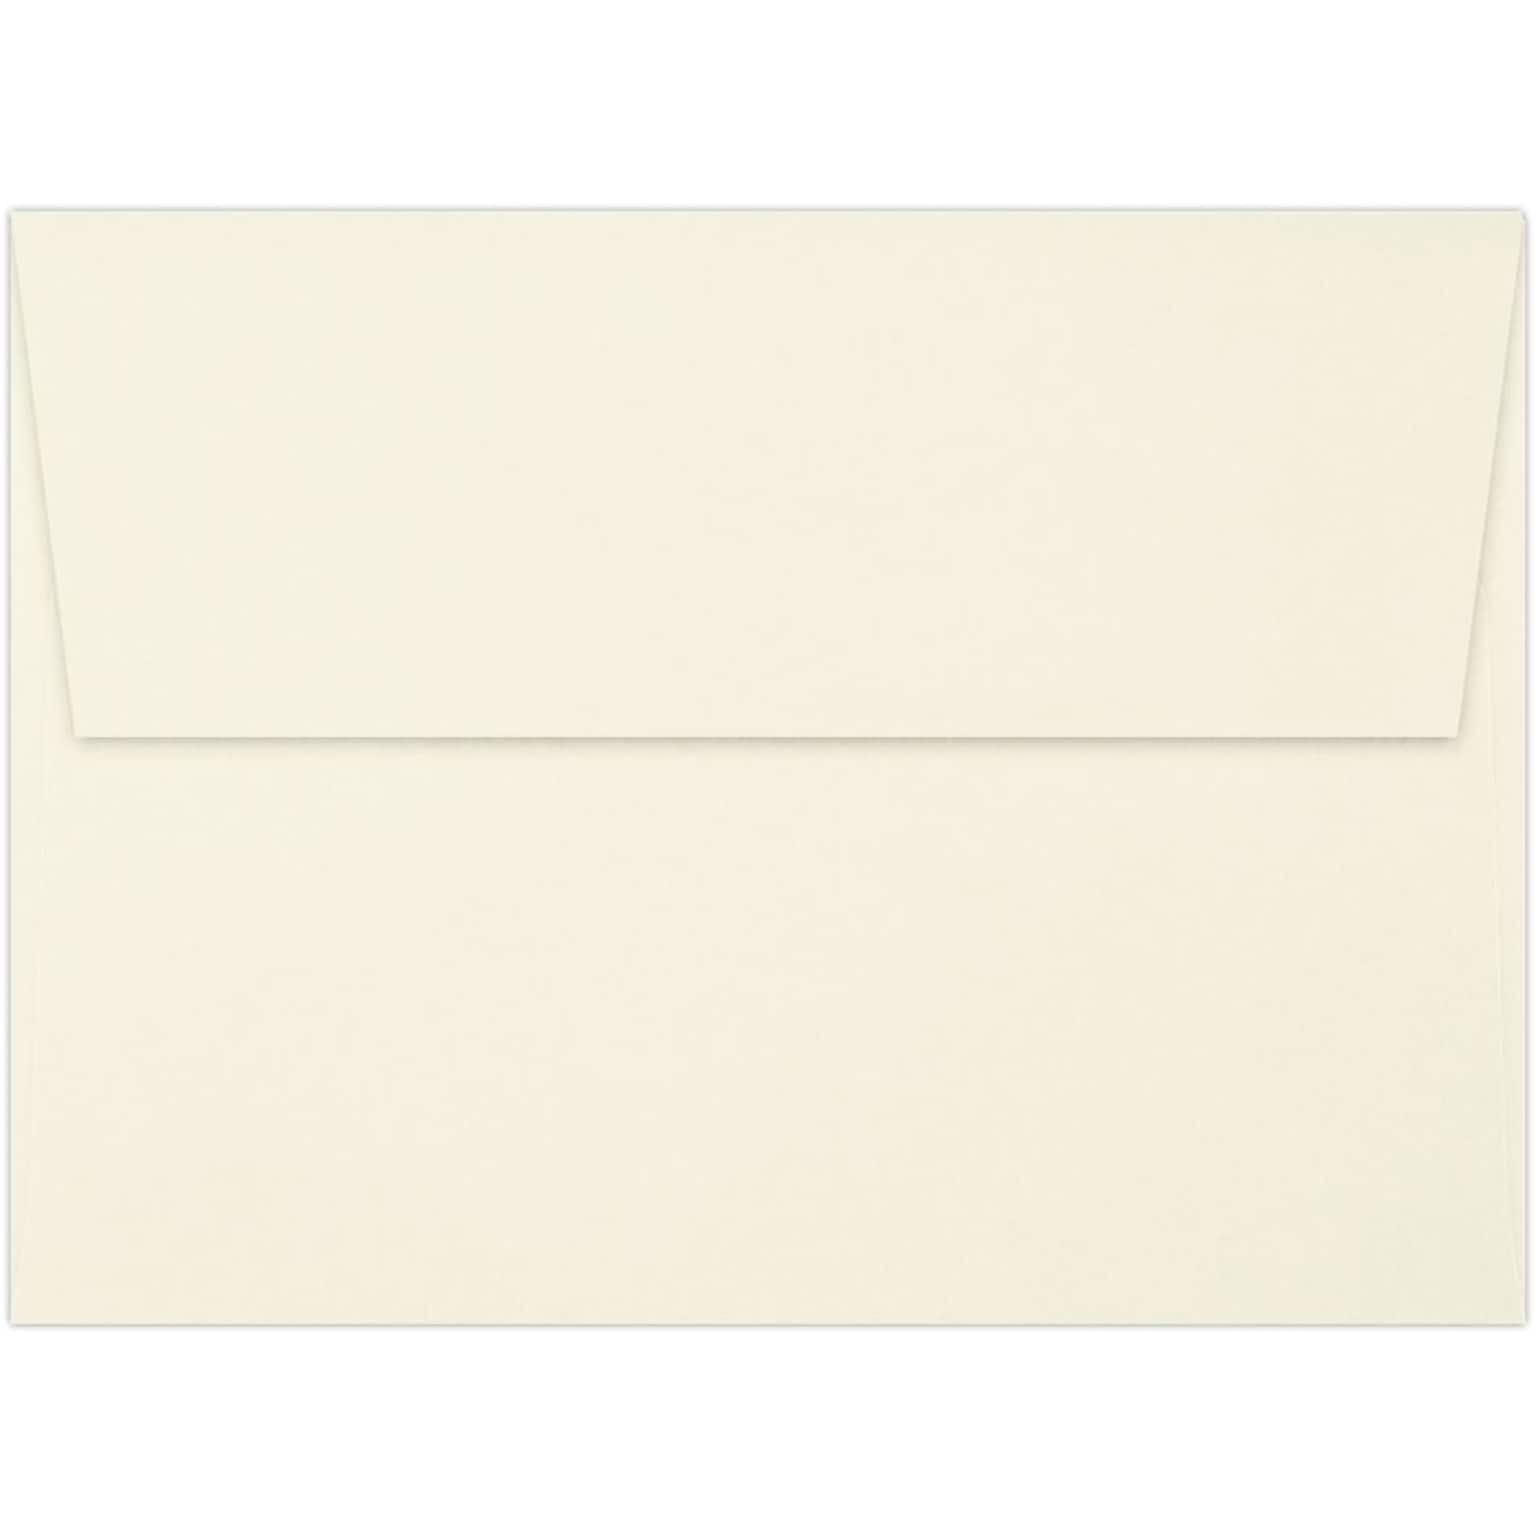 LUX A7 Invitation Envelopes (5 1/4 x 7 1/4) 50/Pack, 70lb. Classic Linen® Natural White (4880-70NWLI-50)